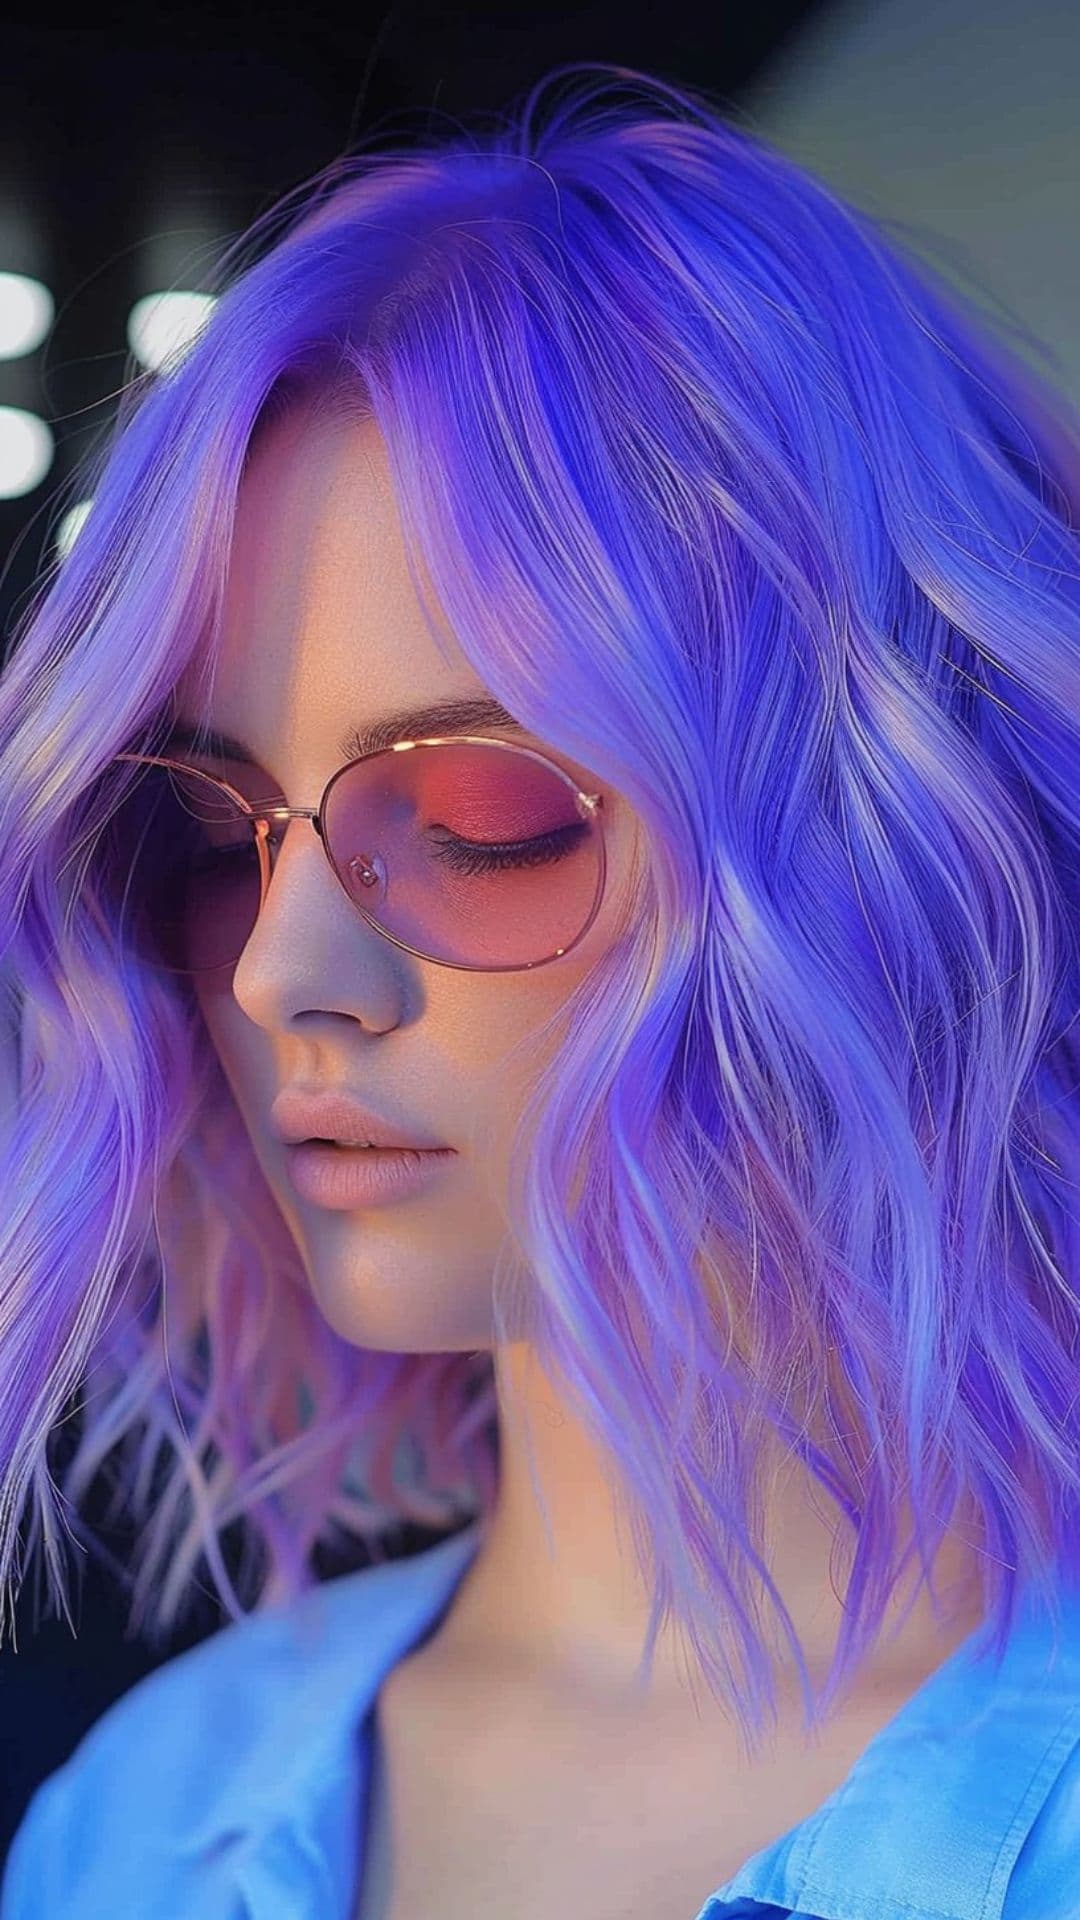 A woman modelling a neon lavender hair.